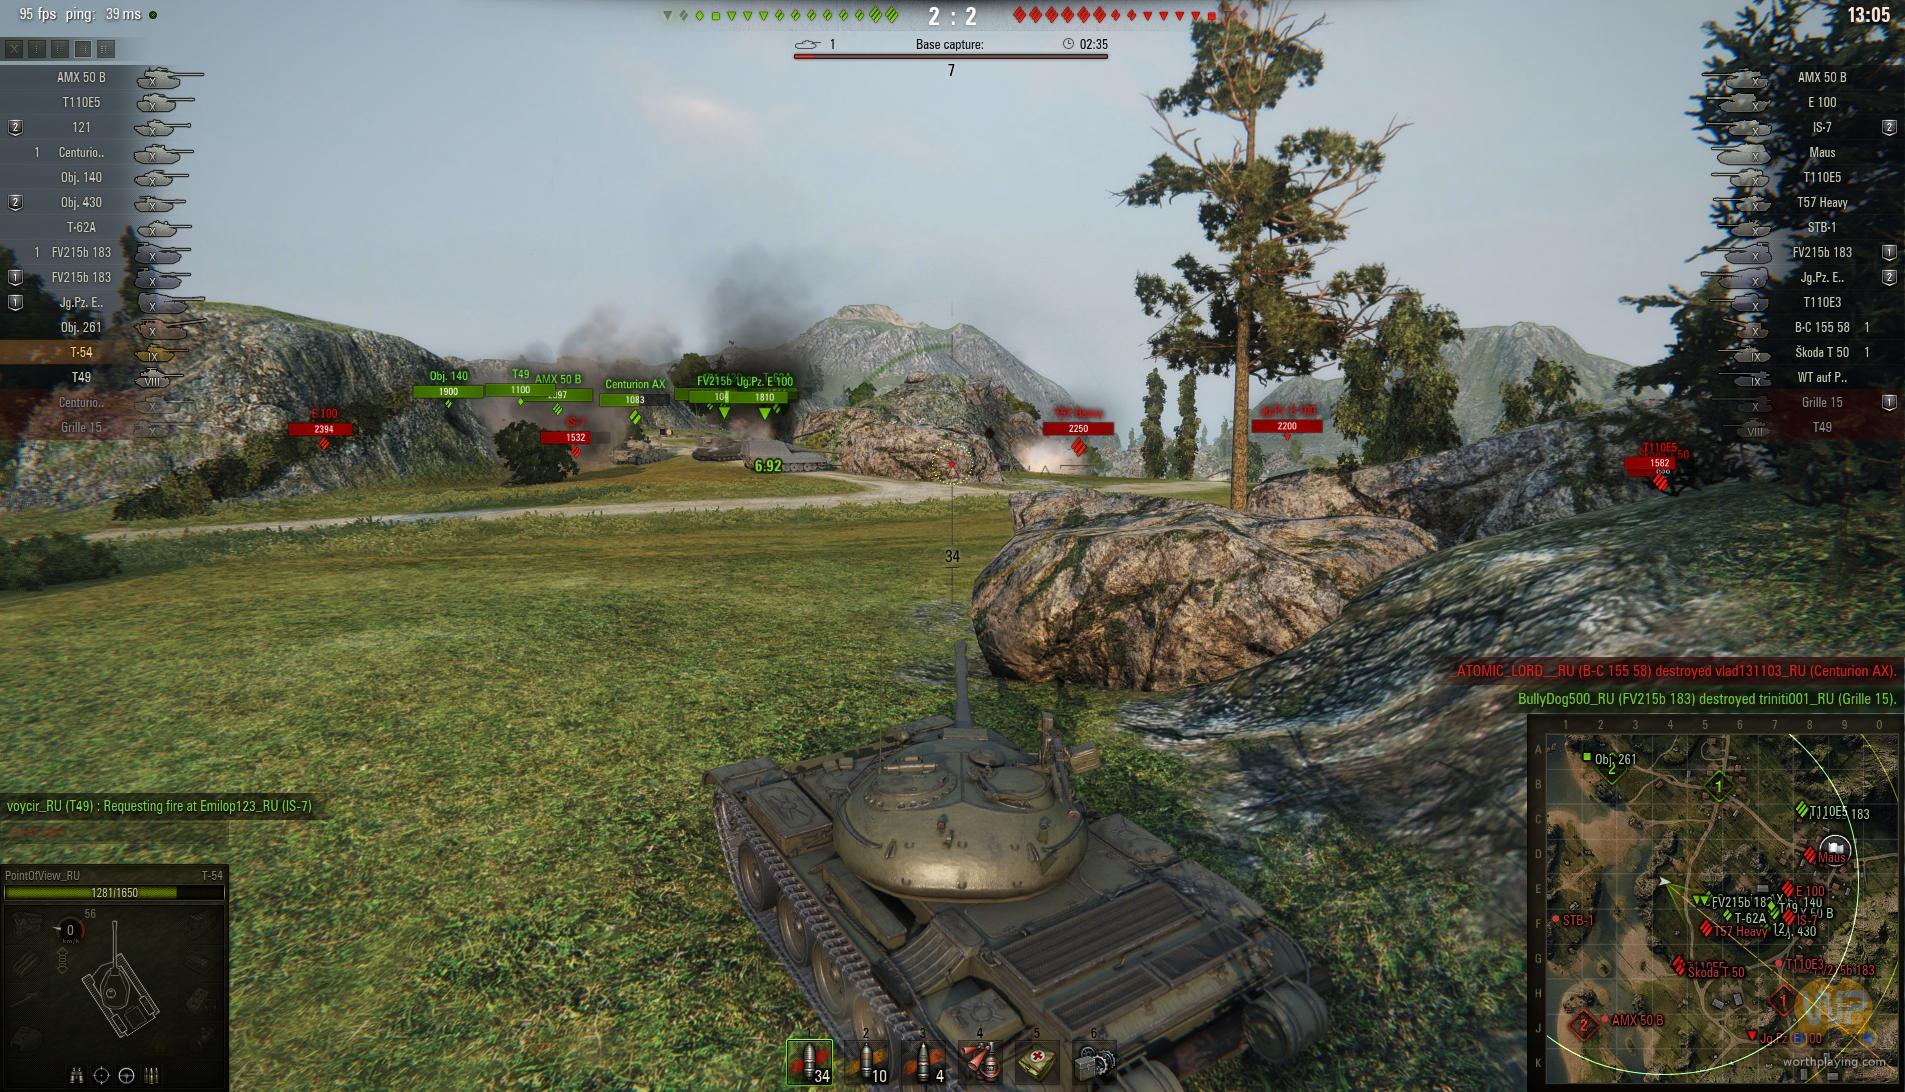 Убрать world of tanks